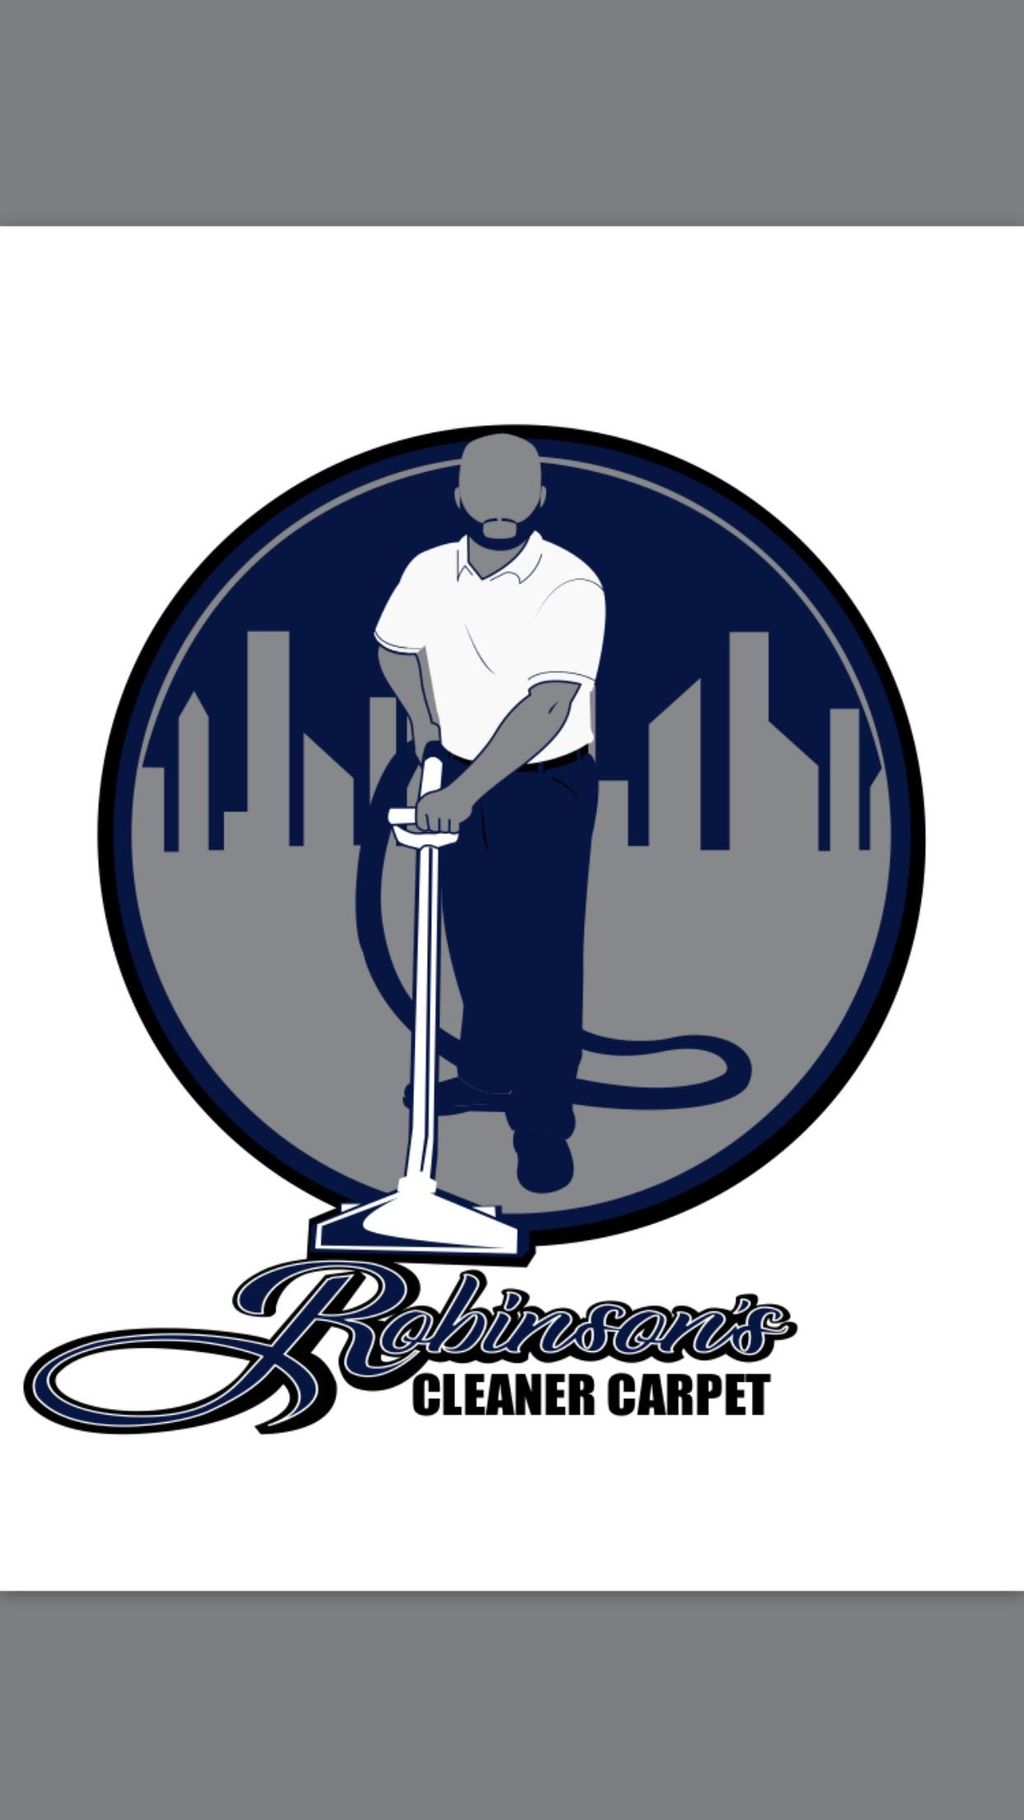 Robinson's Cleaner Carpet